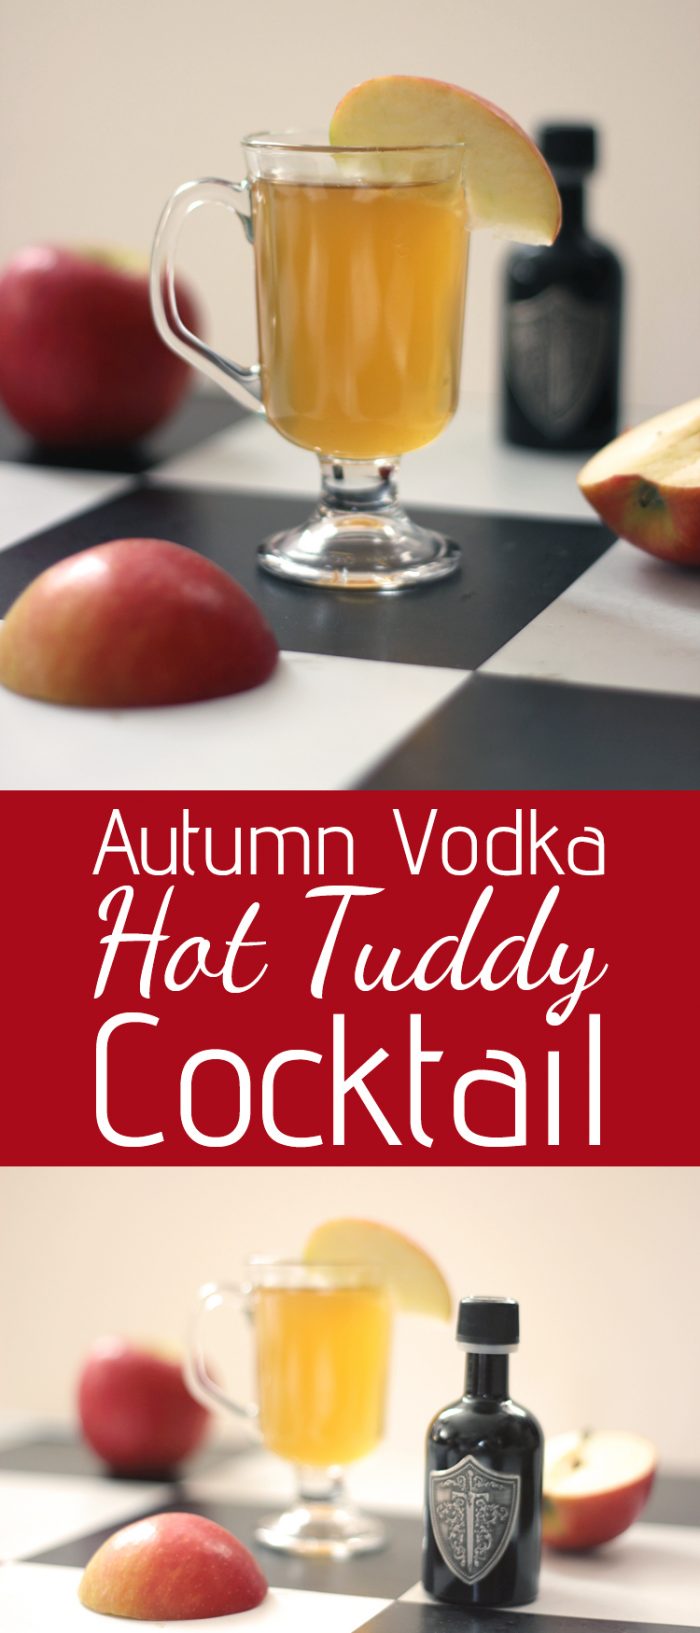 autumn-vodka-hot-tuddy-cocktail